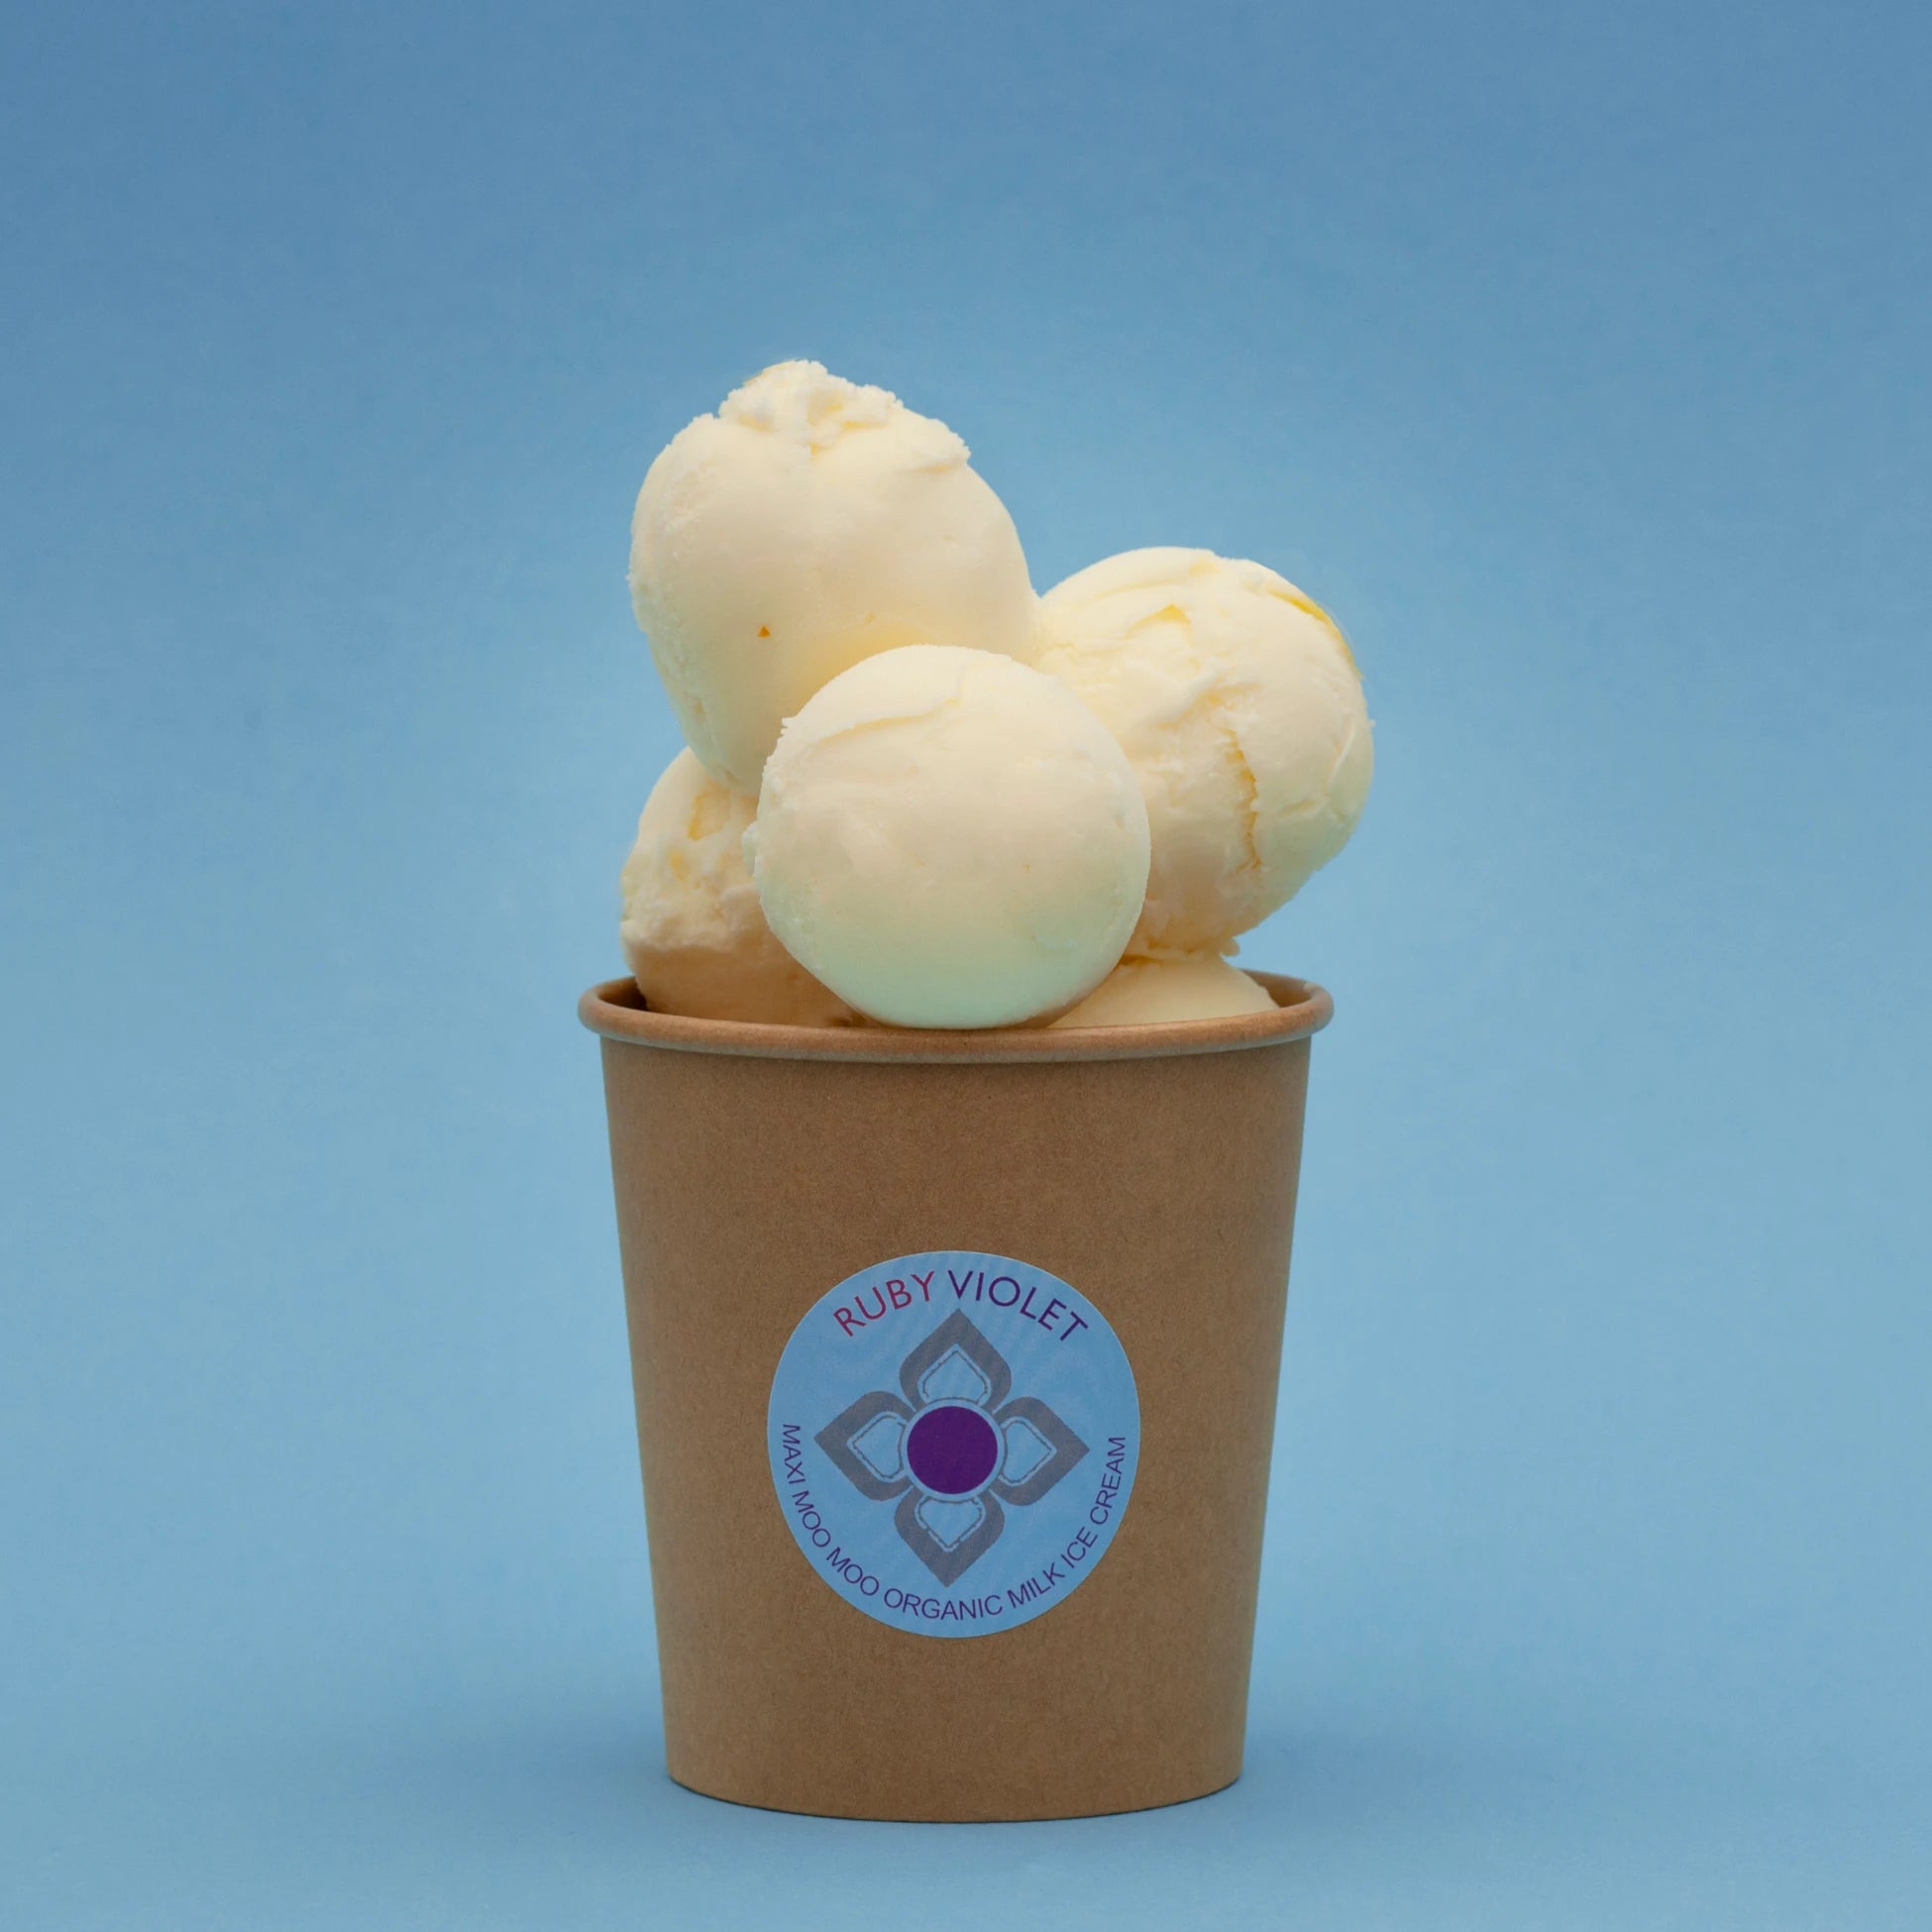 Maxi Moo Moo organic milk ice cream tub